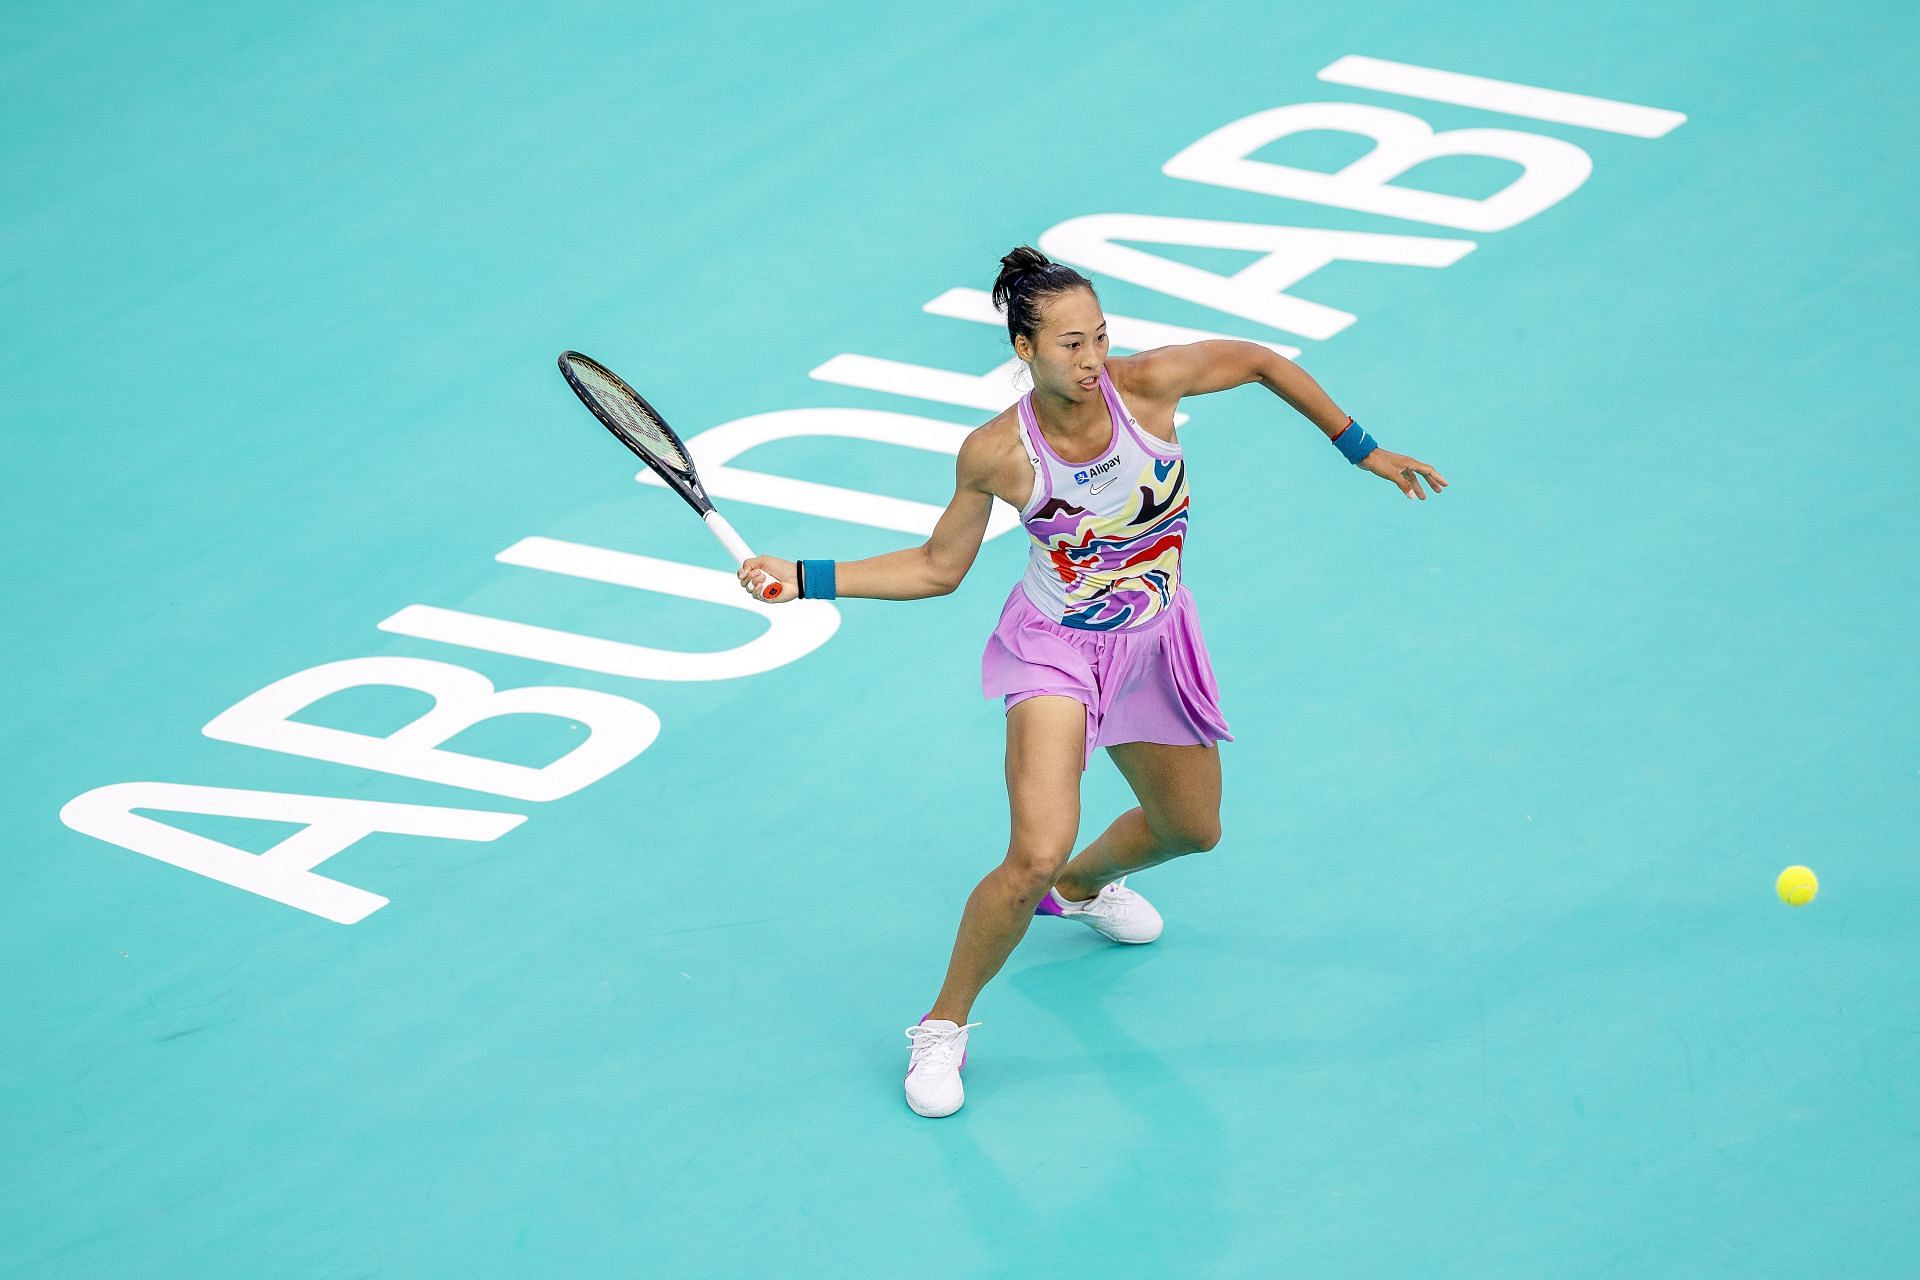 Zheng in action at the Mubadala Abu Dhabi Open